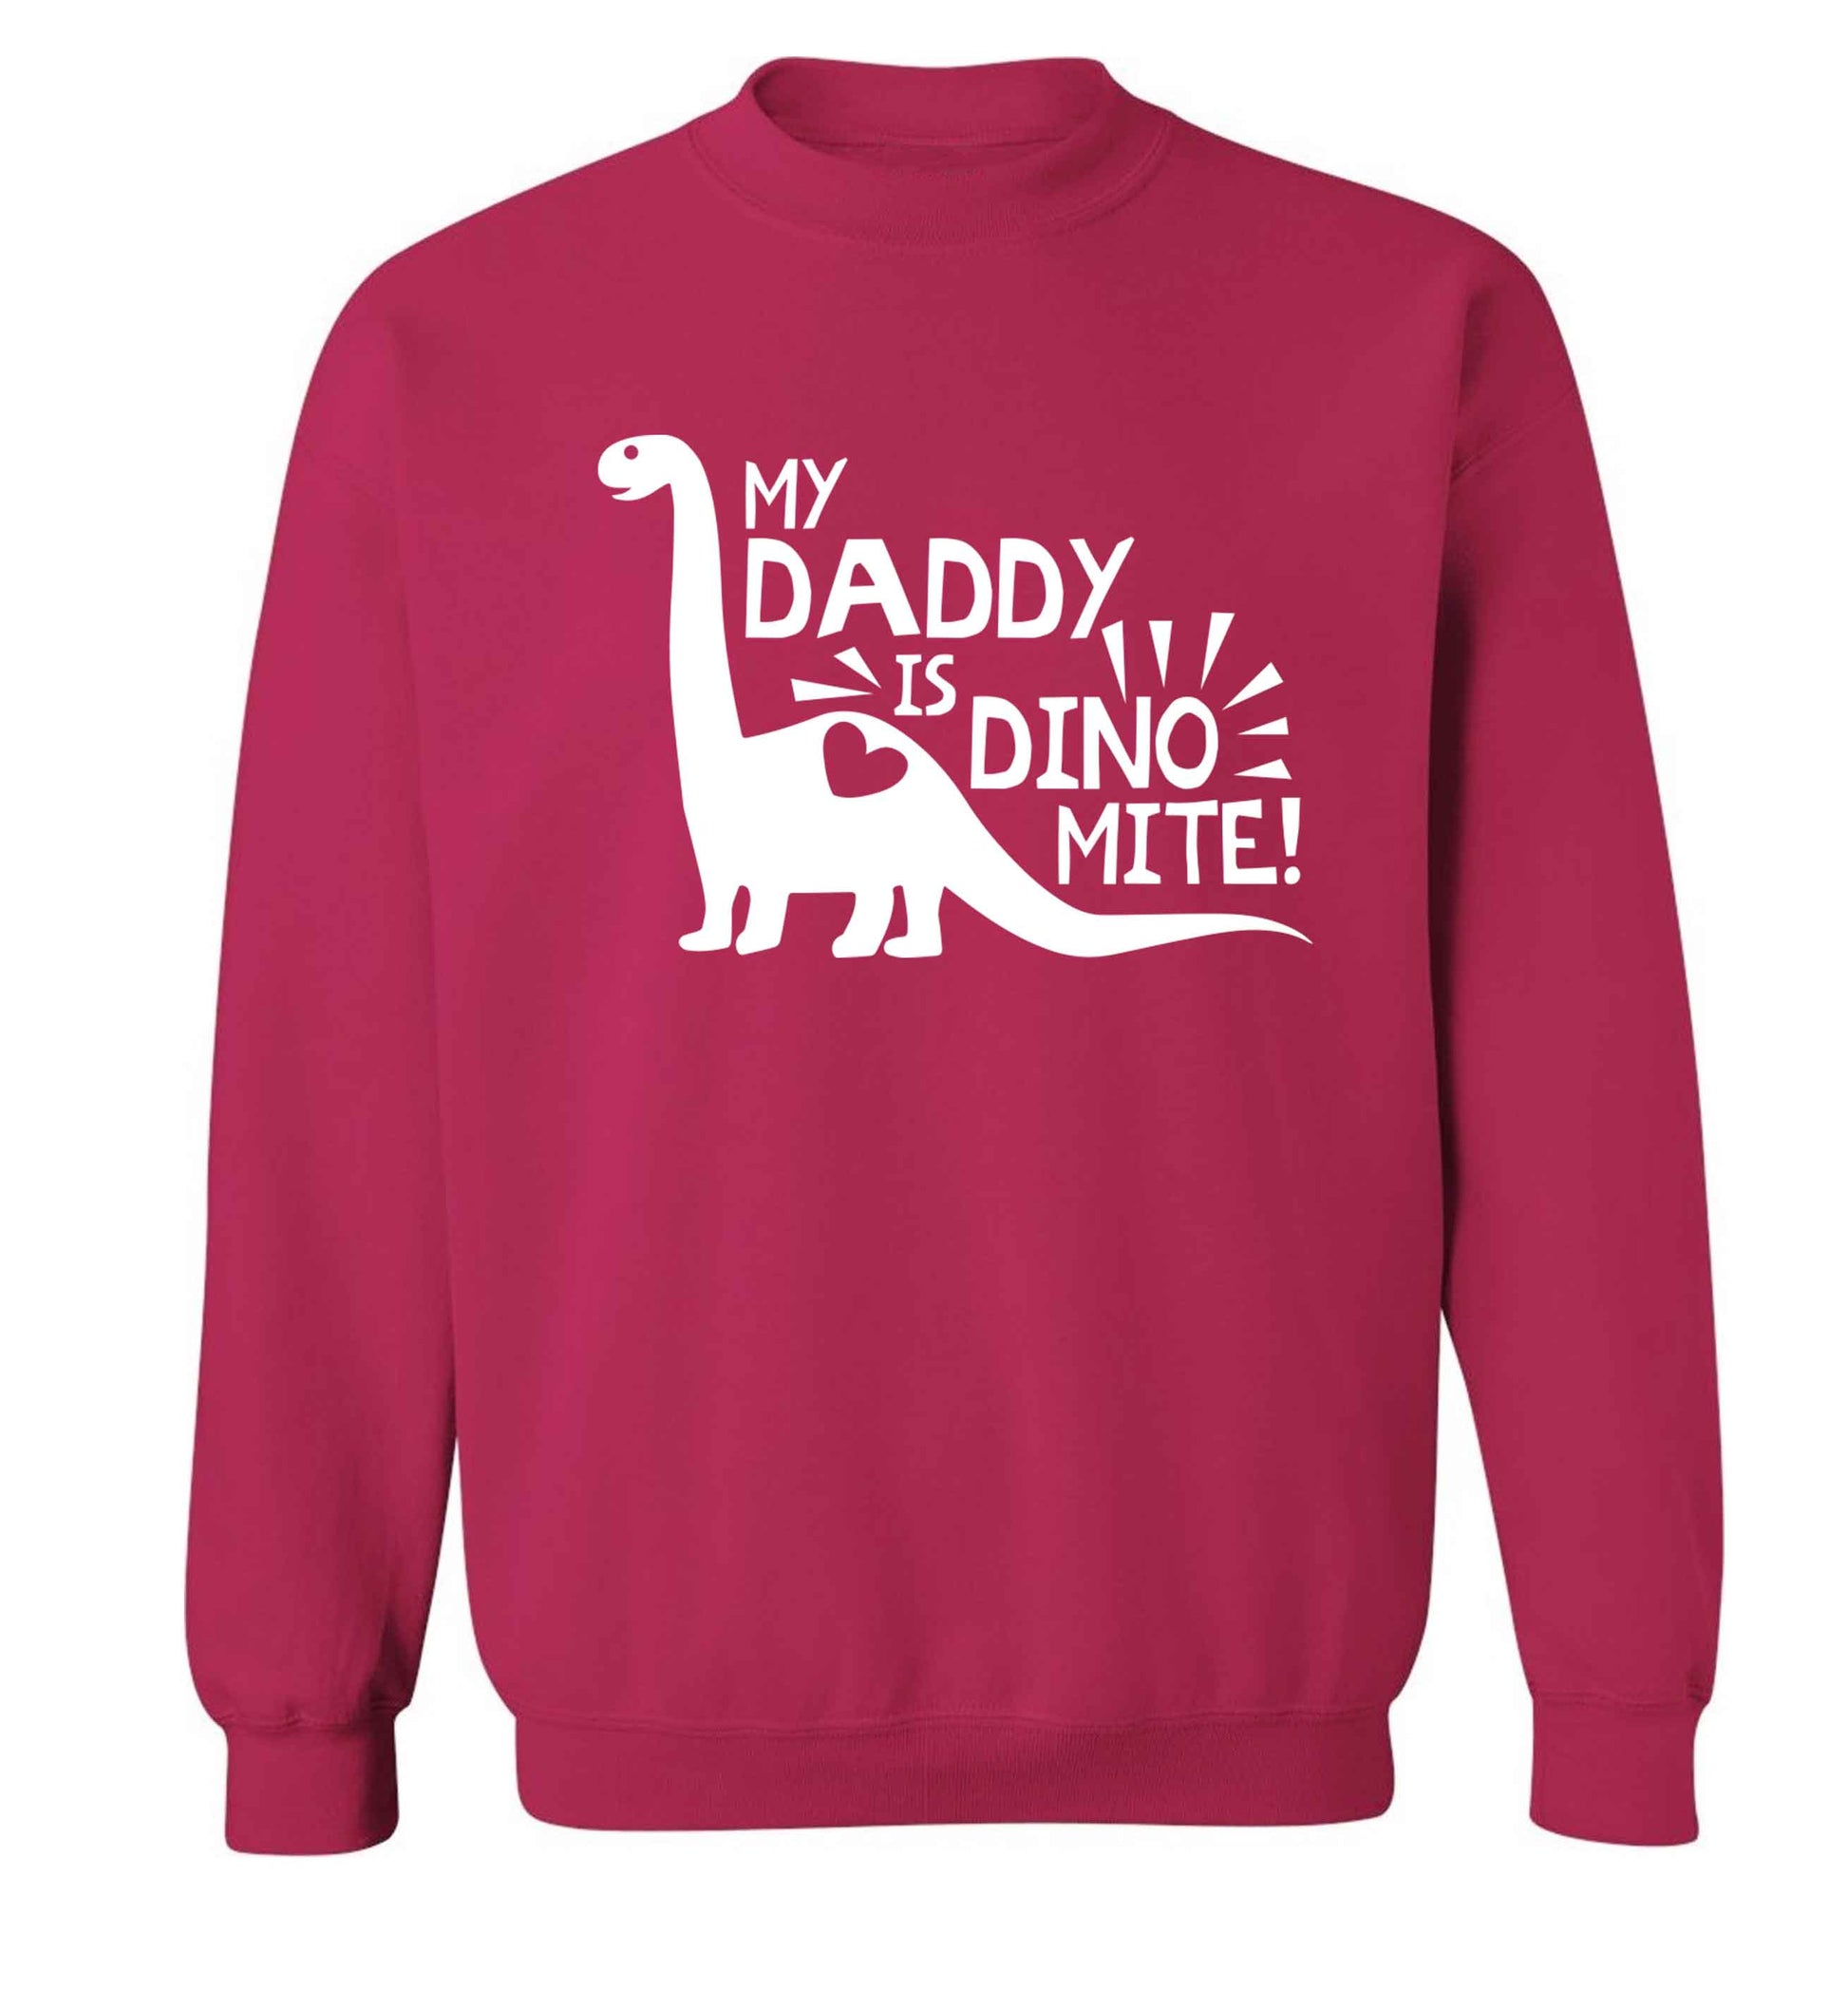 My daddy is dinomite! Adult's unisex pink Sweater 2XL